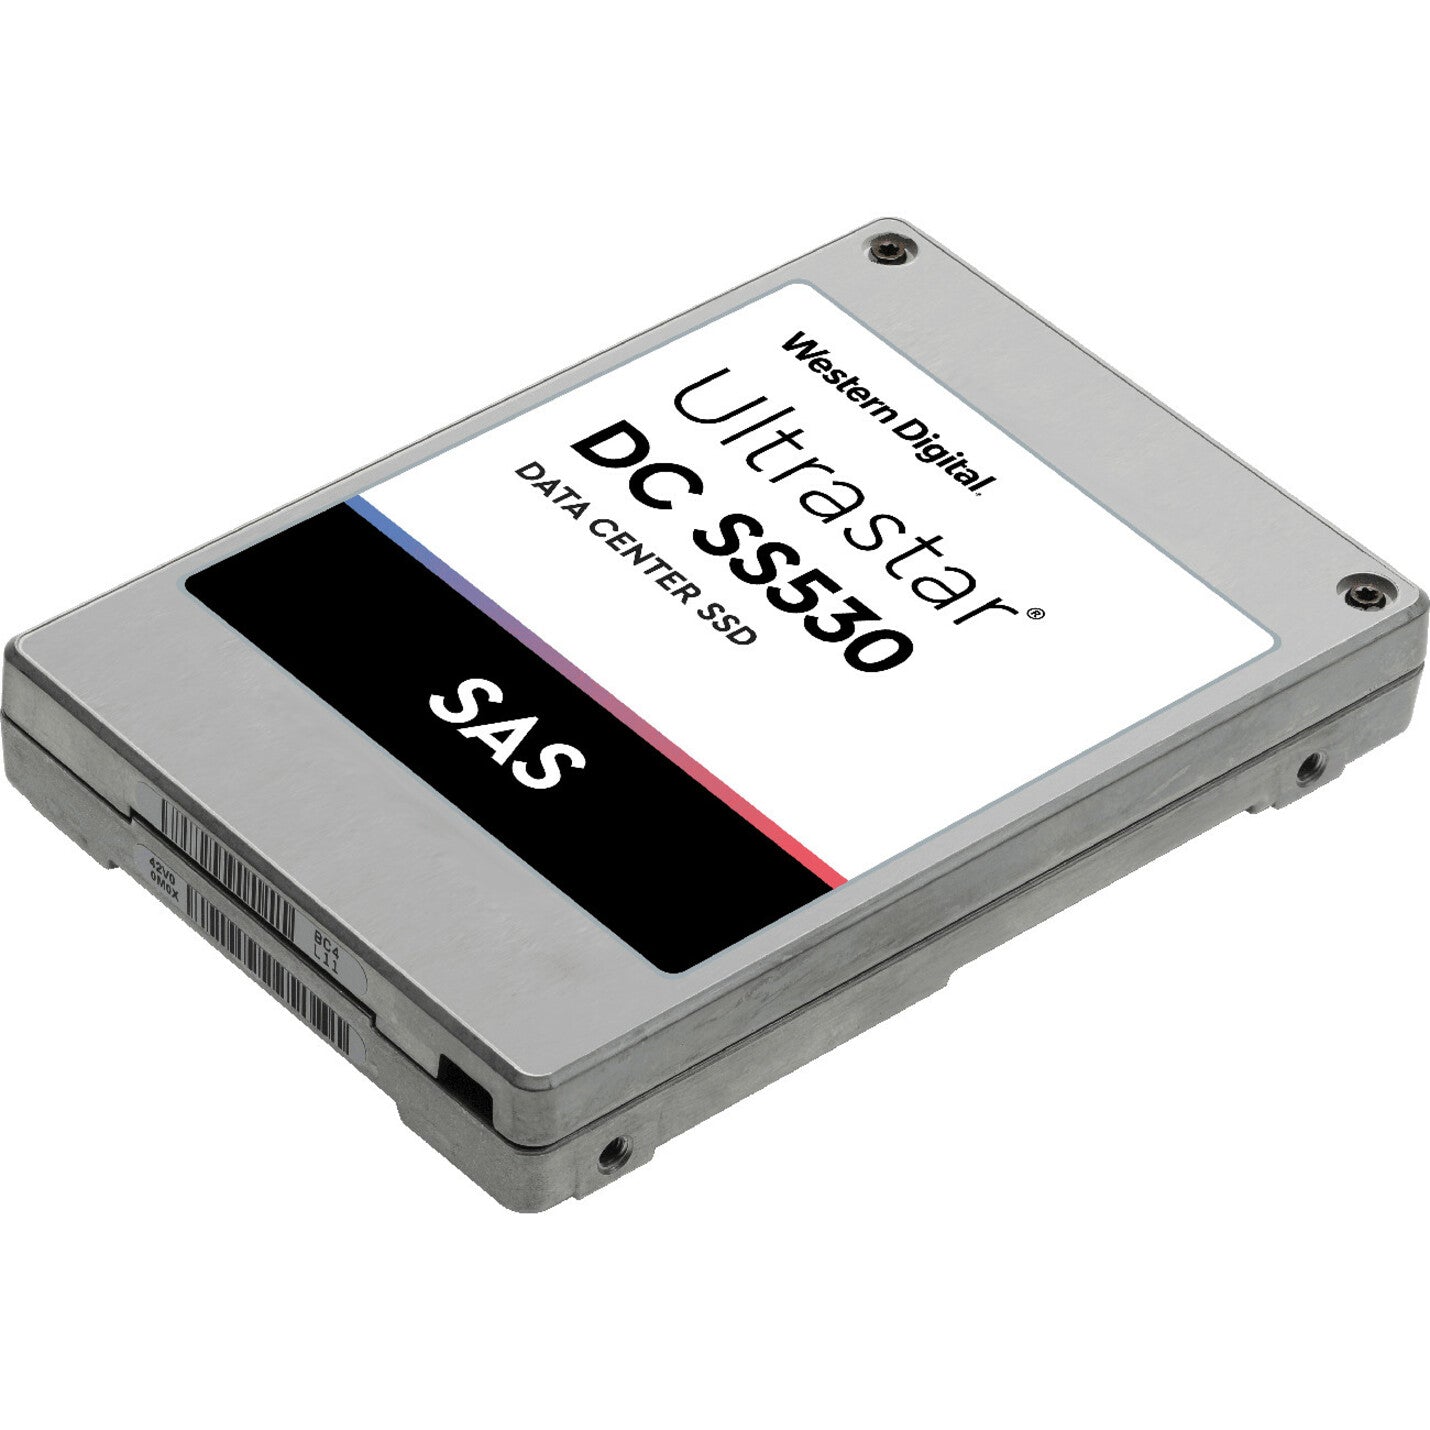 Western Digital Ultrastar DC SS530 WUSTR1548ASS201 480 GB Solid State Drive - 2.5" Internal - SAS (12Gb/s SAS)